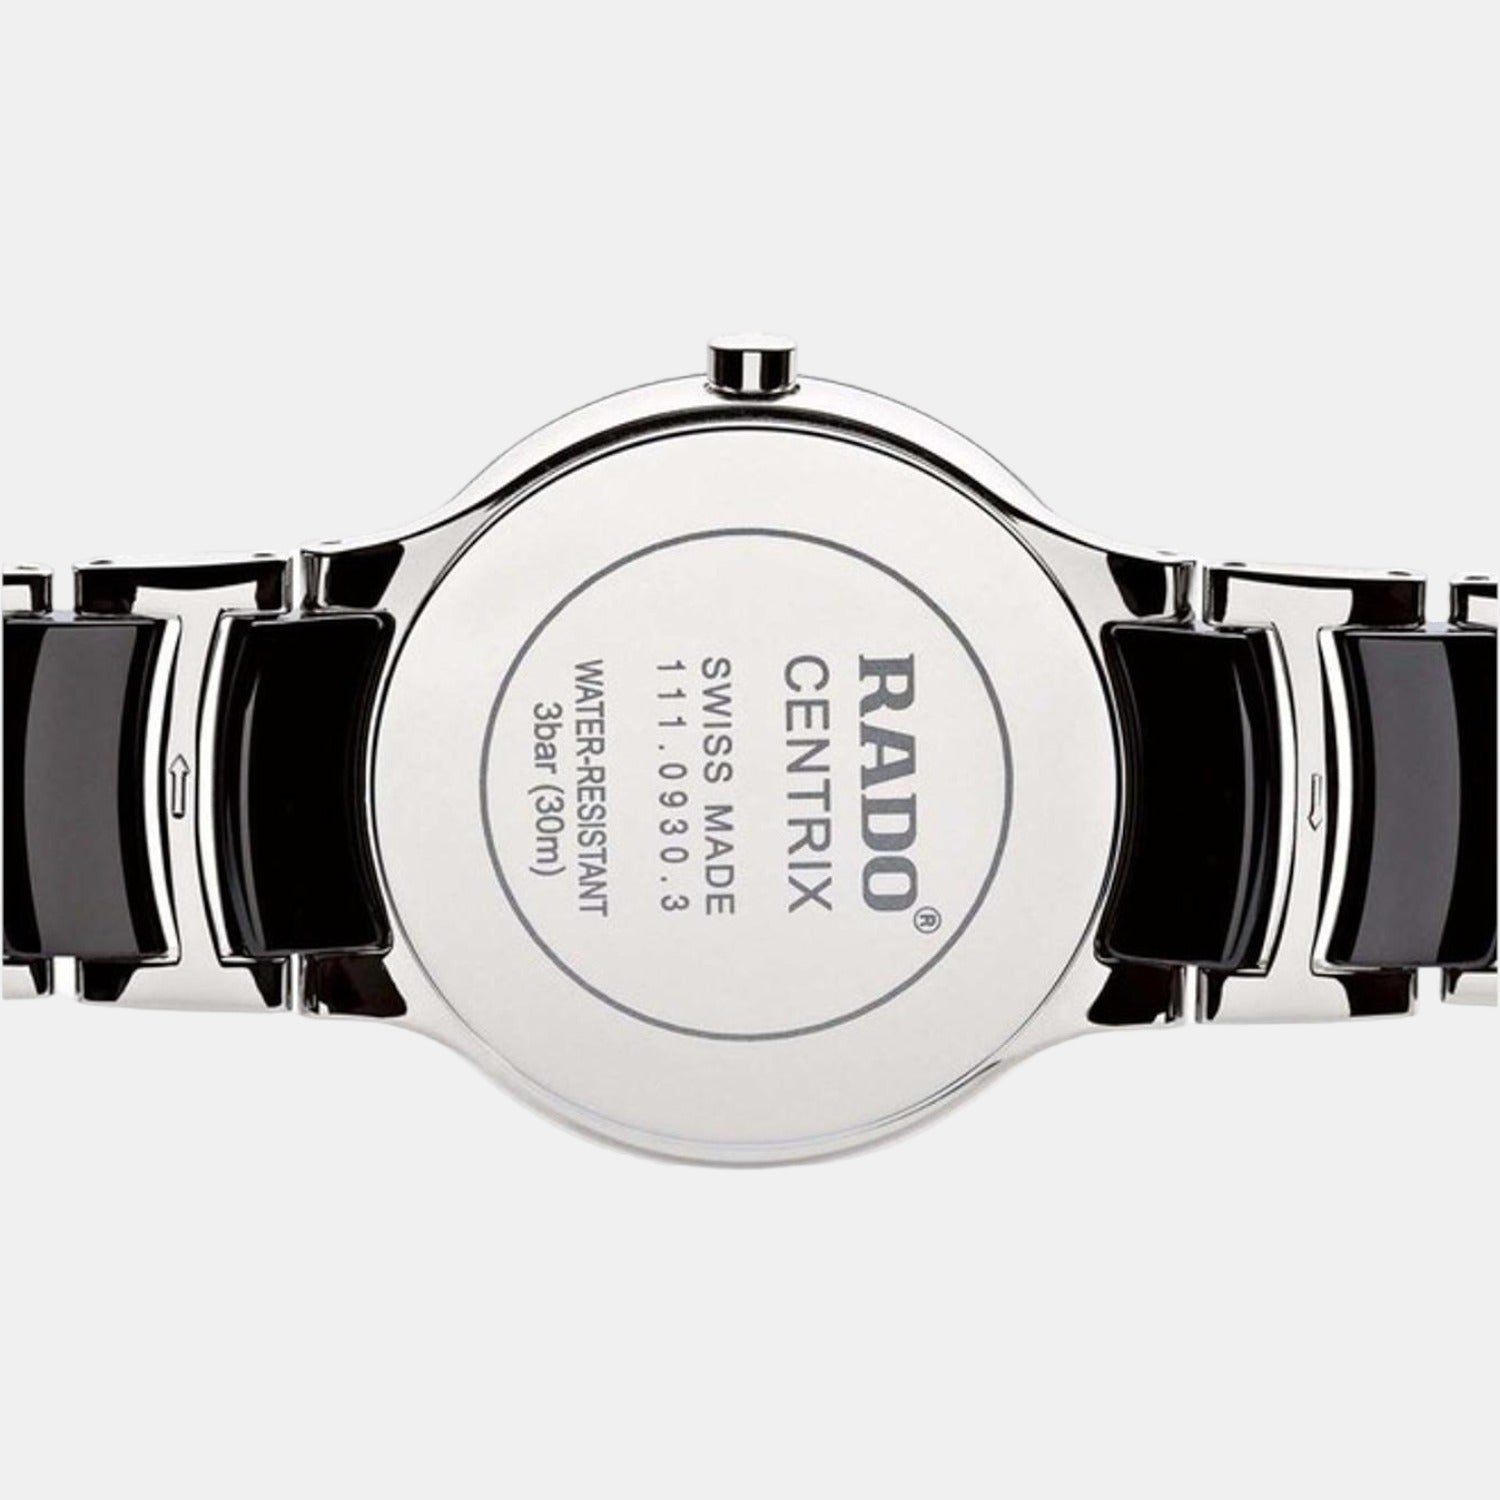 rado-stainless-steel-black-analog-unisex-watch-r30935172